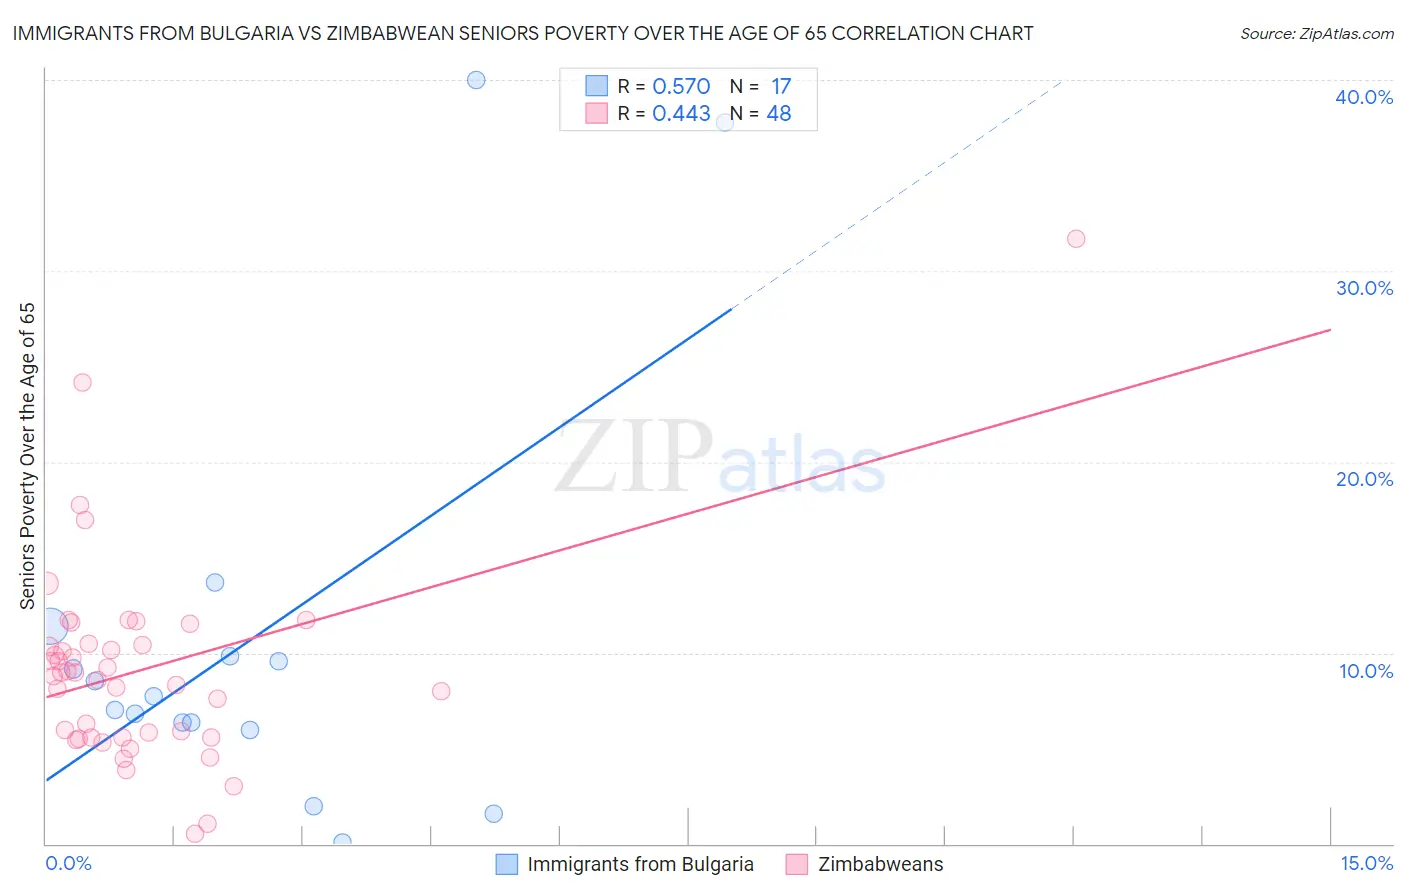 Immigrants from Bulgaria vs Zimbabwean Seniors Poverty Over the Age of 65